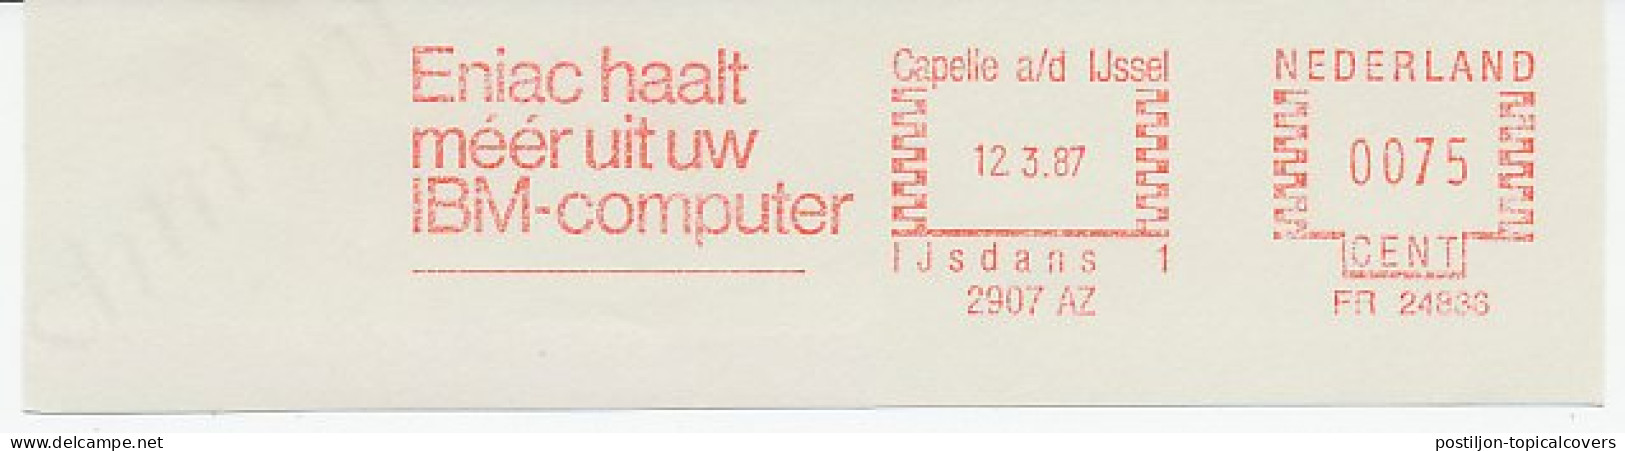 Meter Cut Netherlands 1987 Computer - IBM - Eniac - Informática